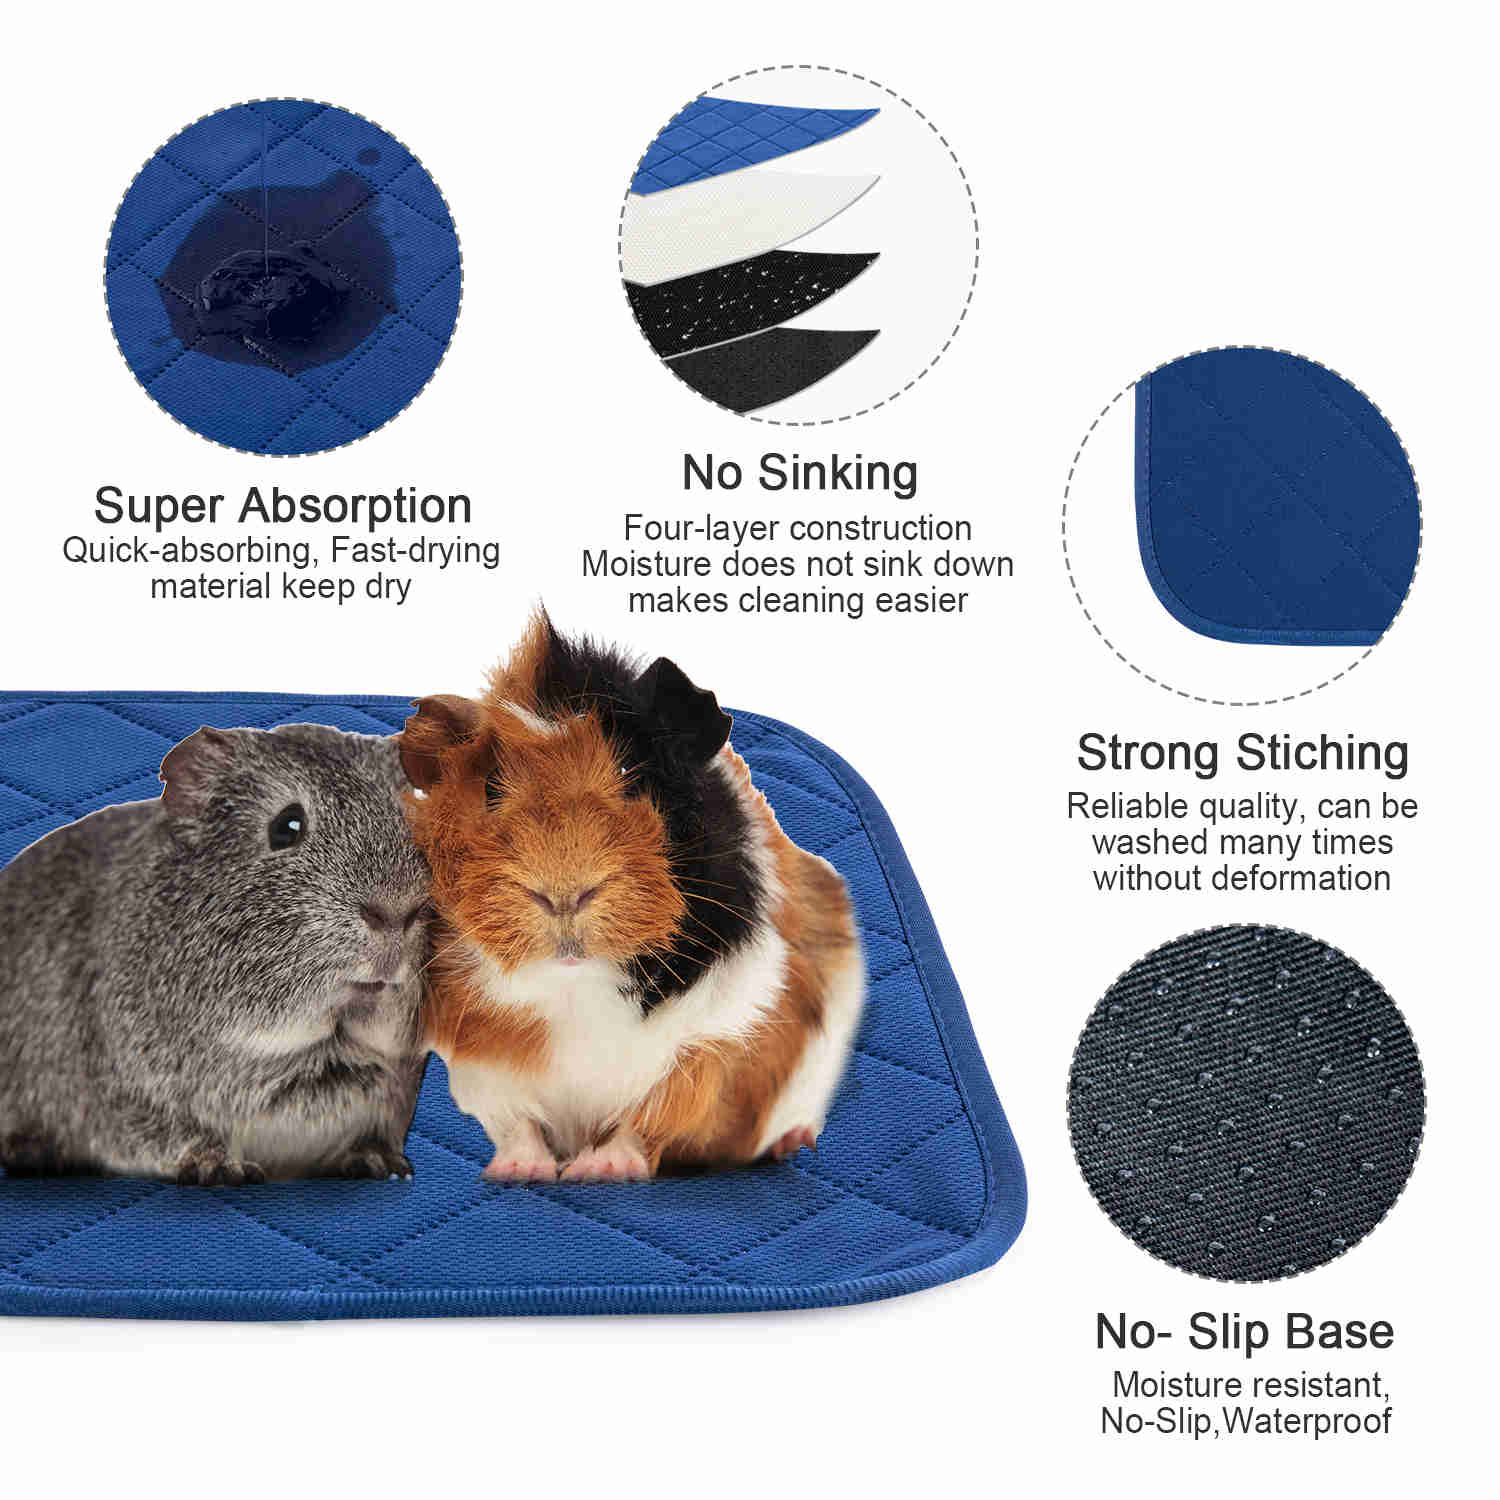 Washable Small Pet Pads, like guinea pigs(Blue Orange)